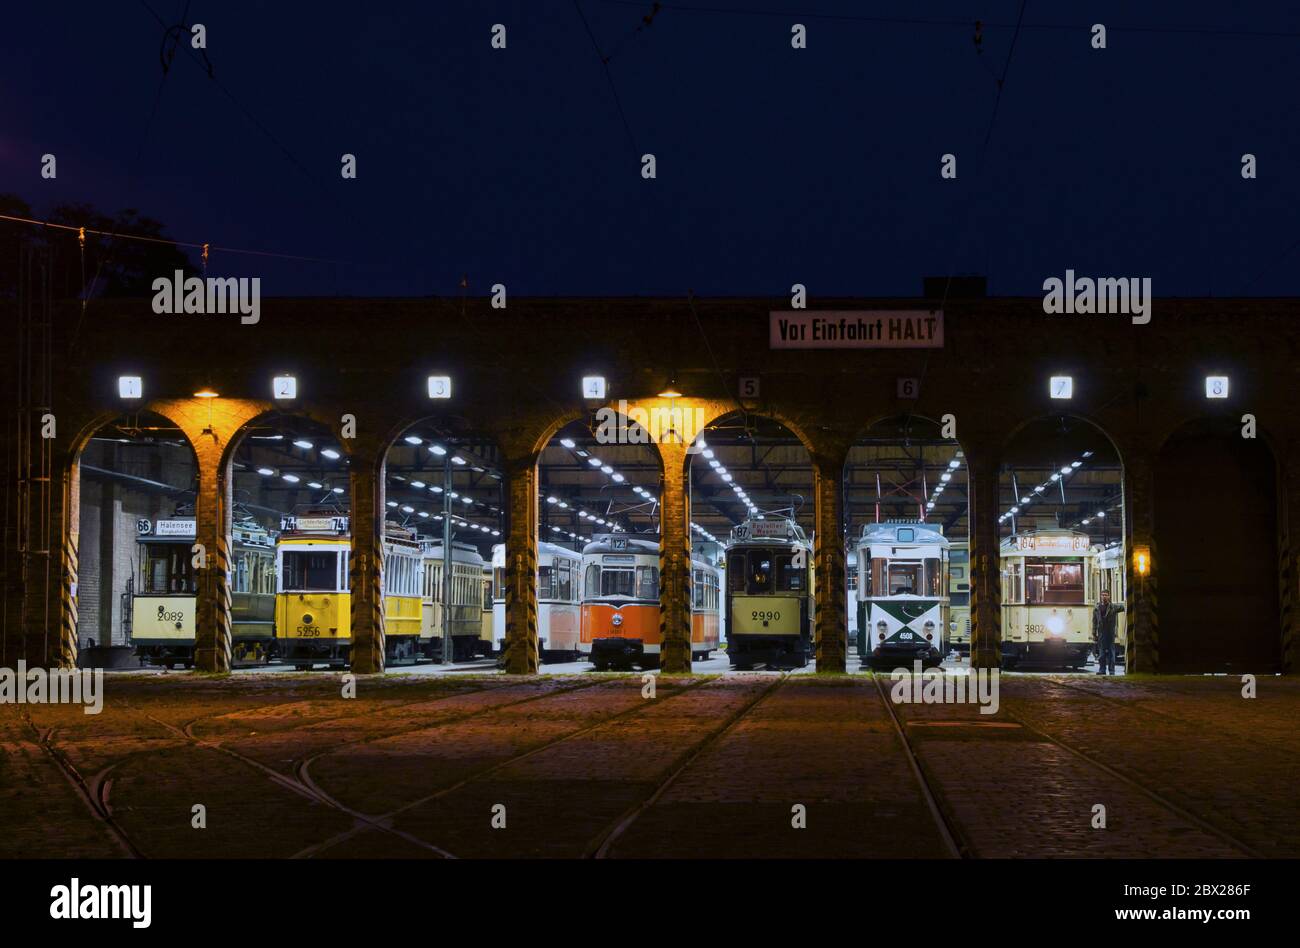 Alter Lokschuppen mit verschiedenen Straßenbahnen in Berlin - Pankow Stock Photo